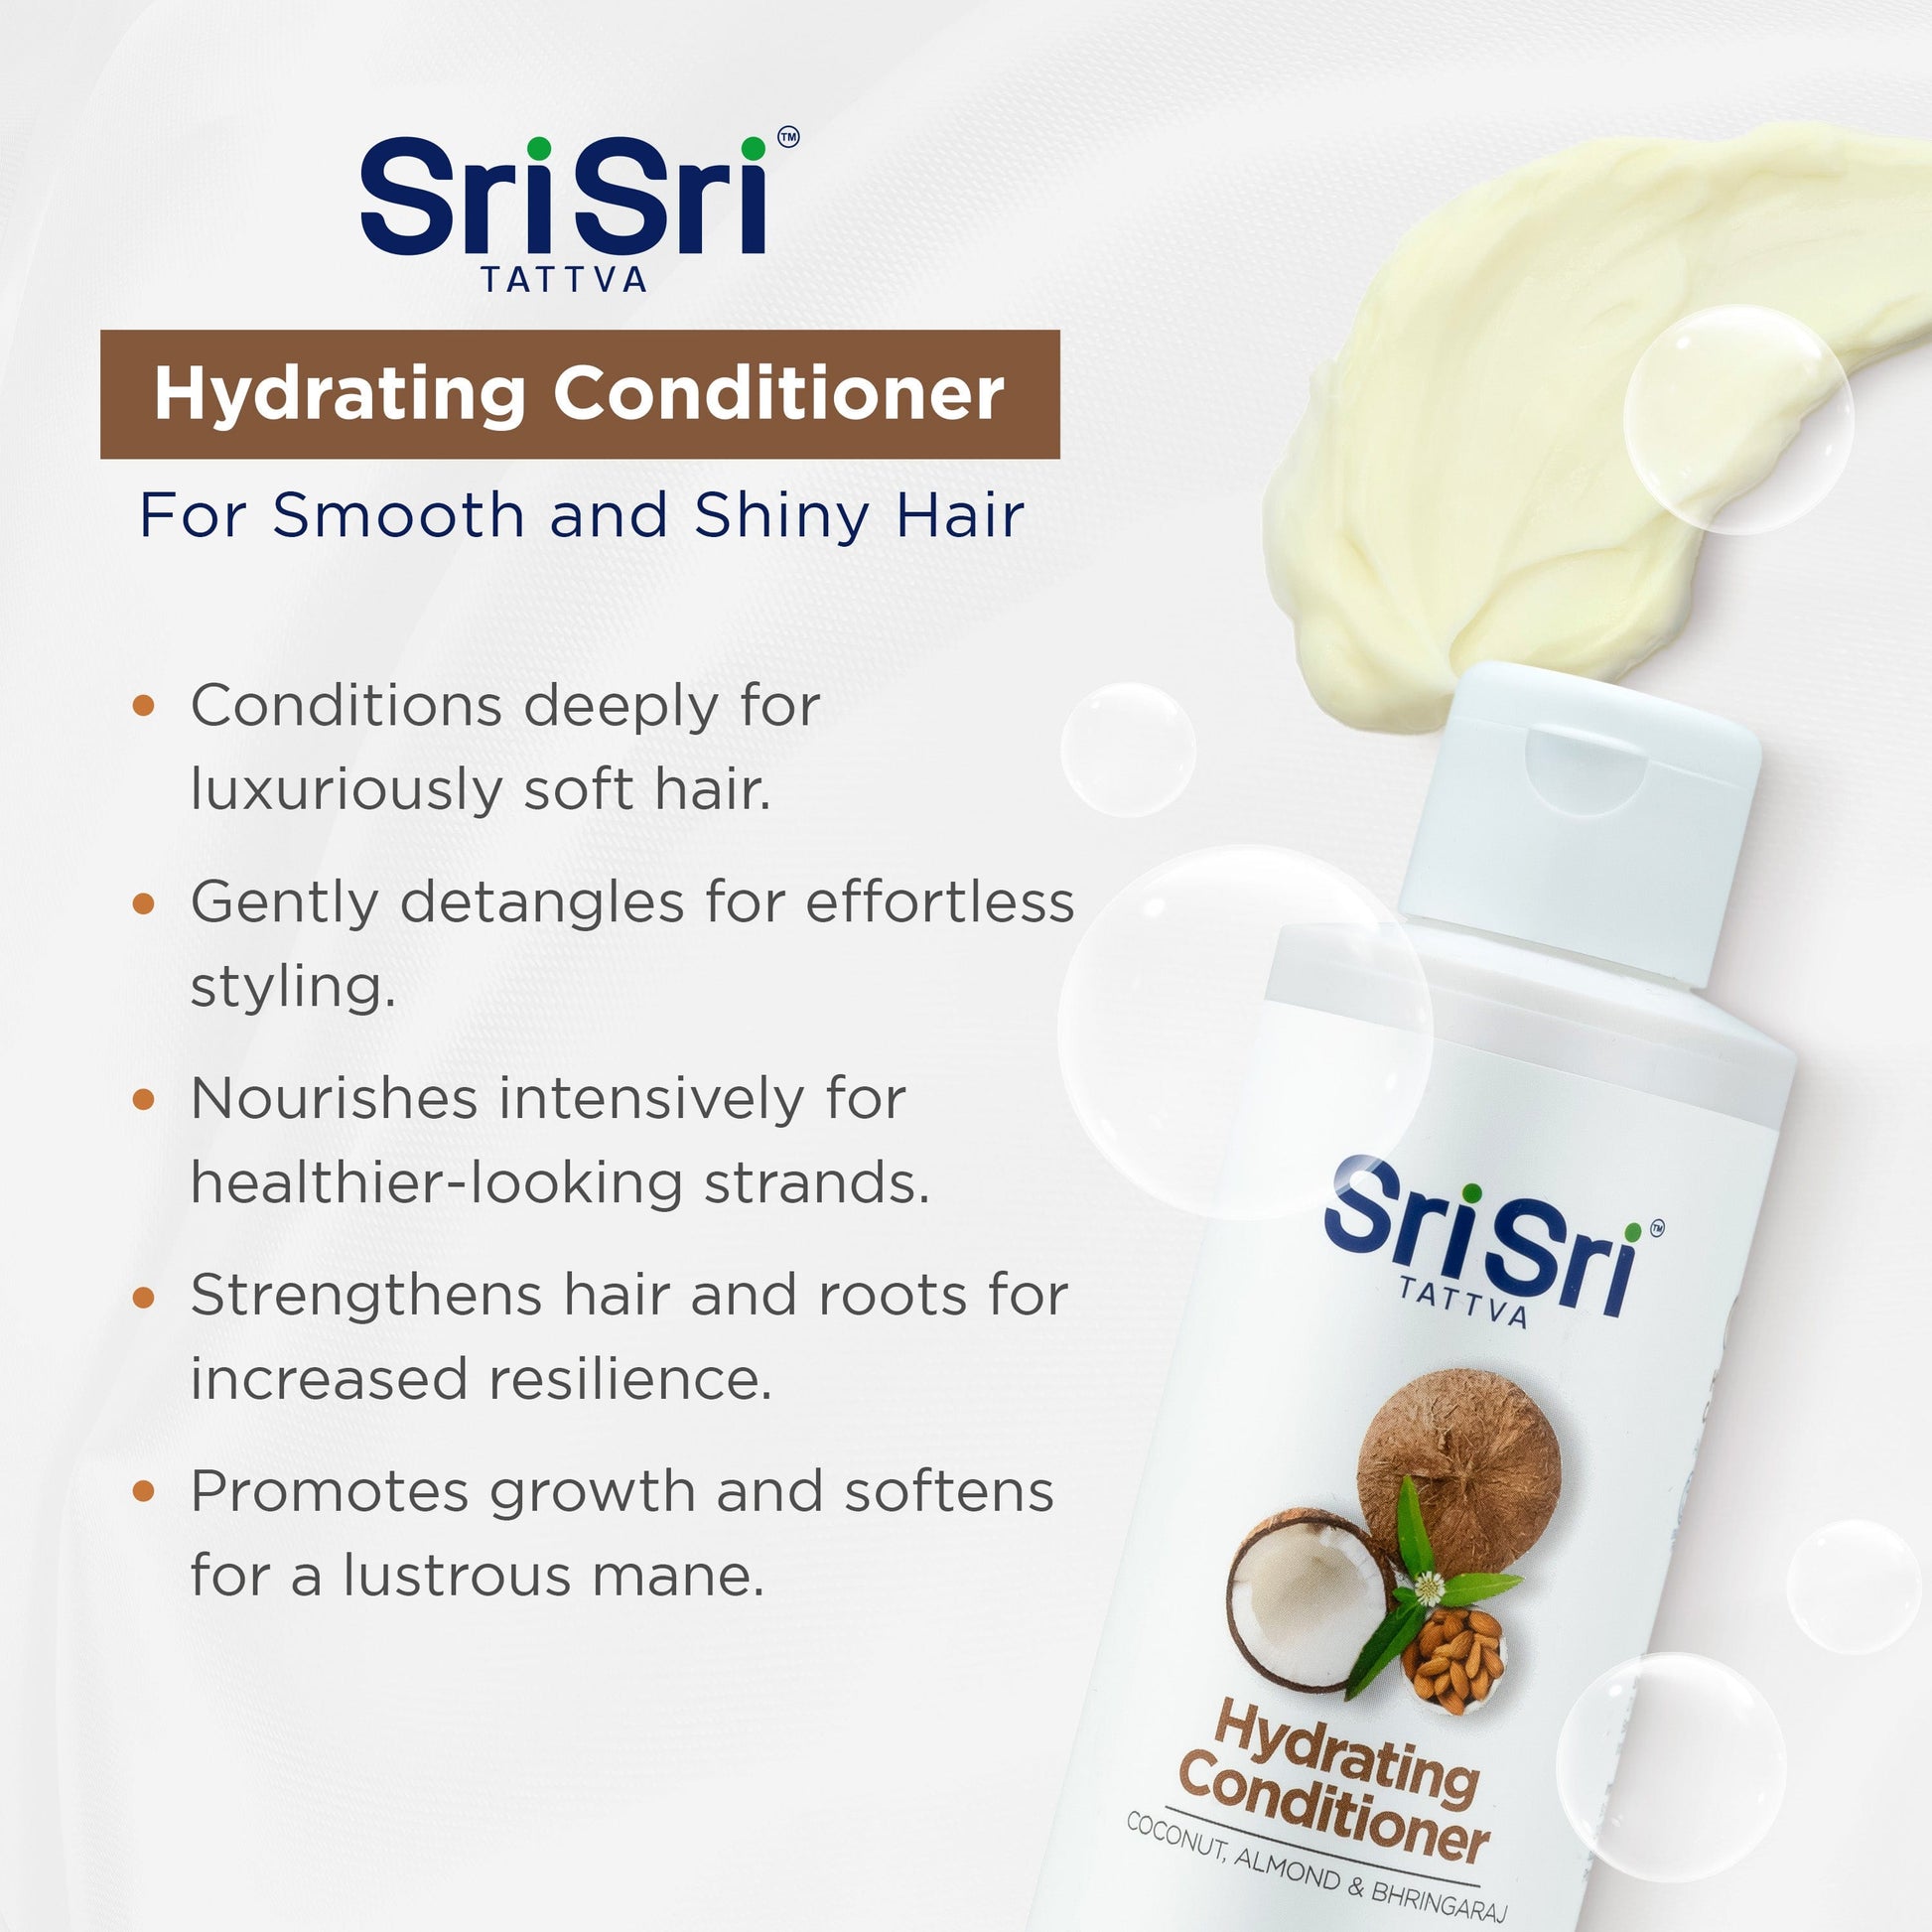 Sri Sri Tattva Cosmetics Hydrating Conditioner